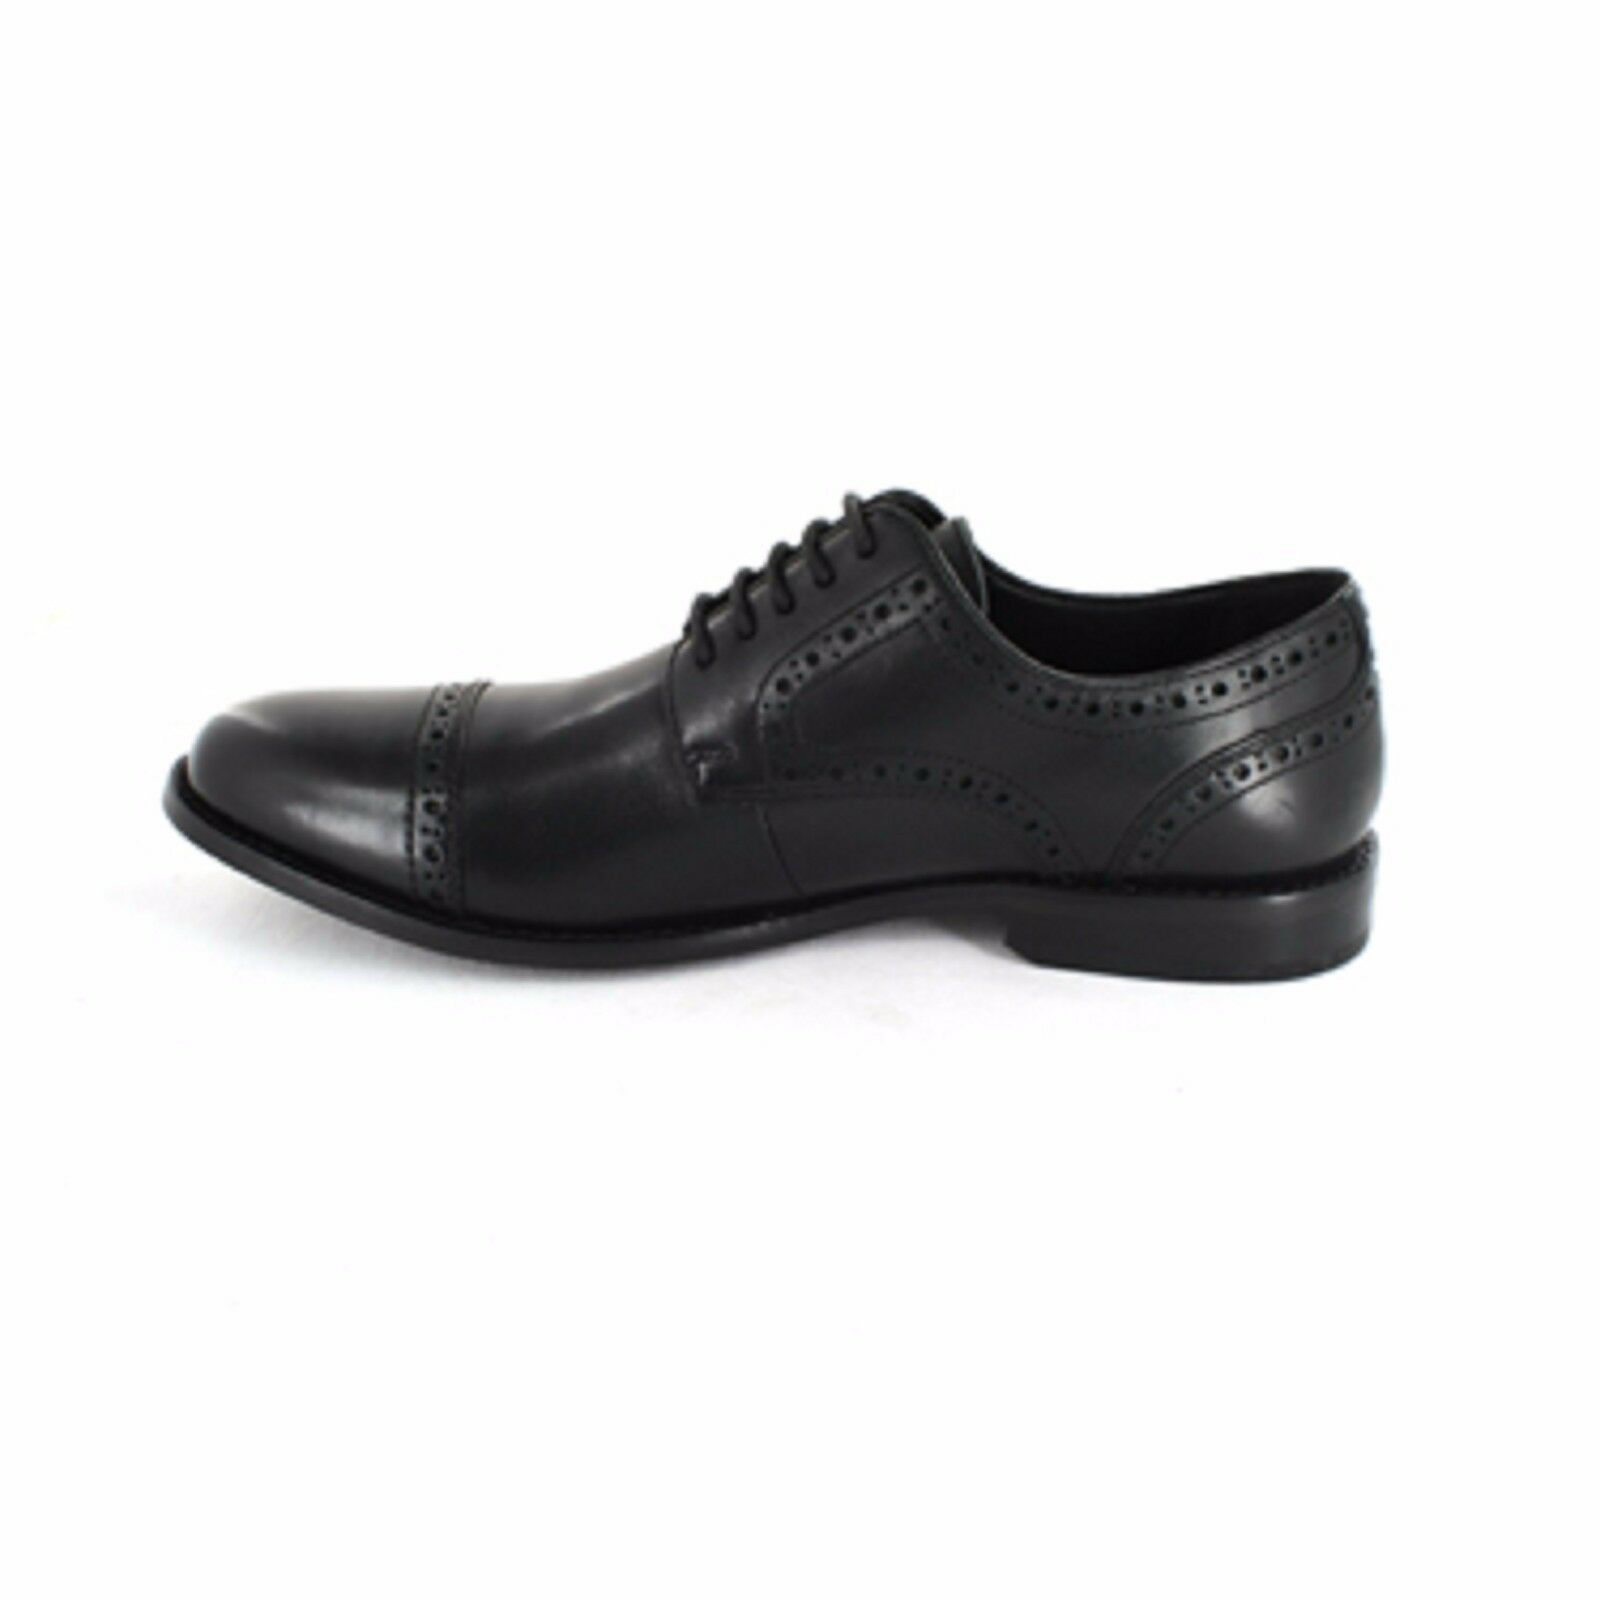 Nunn Bush Men Shoes Norcross Black Leather Lightweight Cap Toe Formal 84526-001 - image 2 of 7